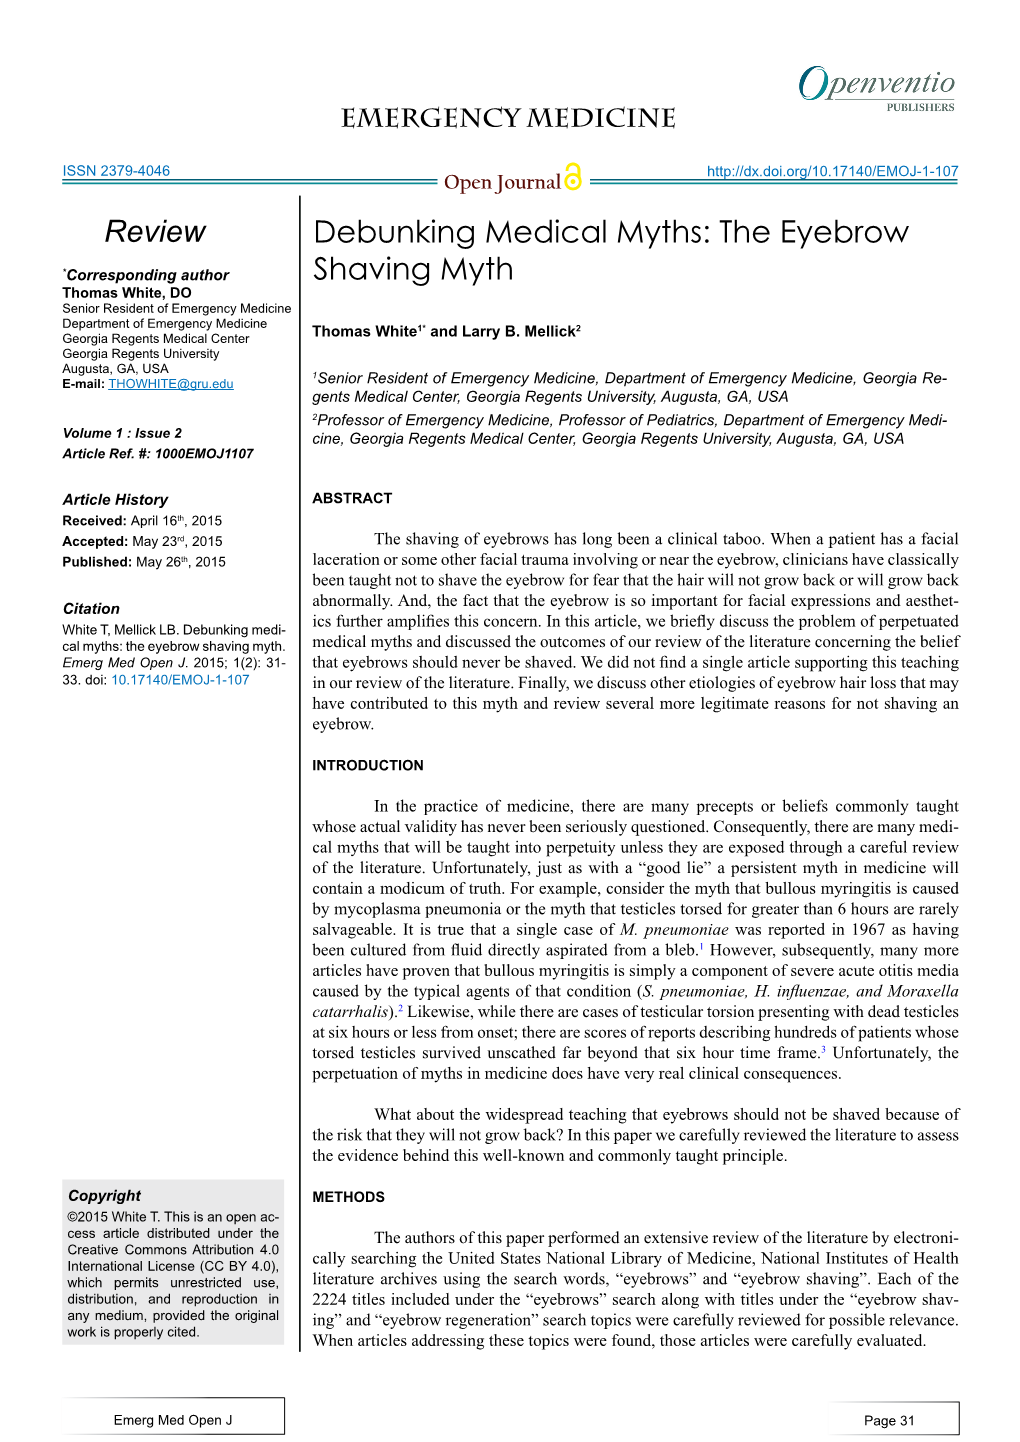 The Eyebrow Shaving Myth